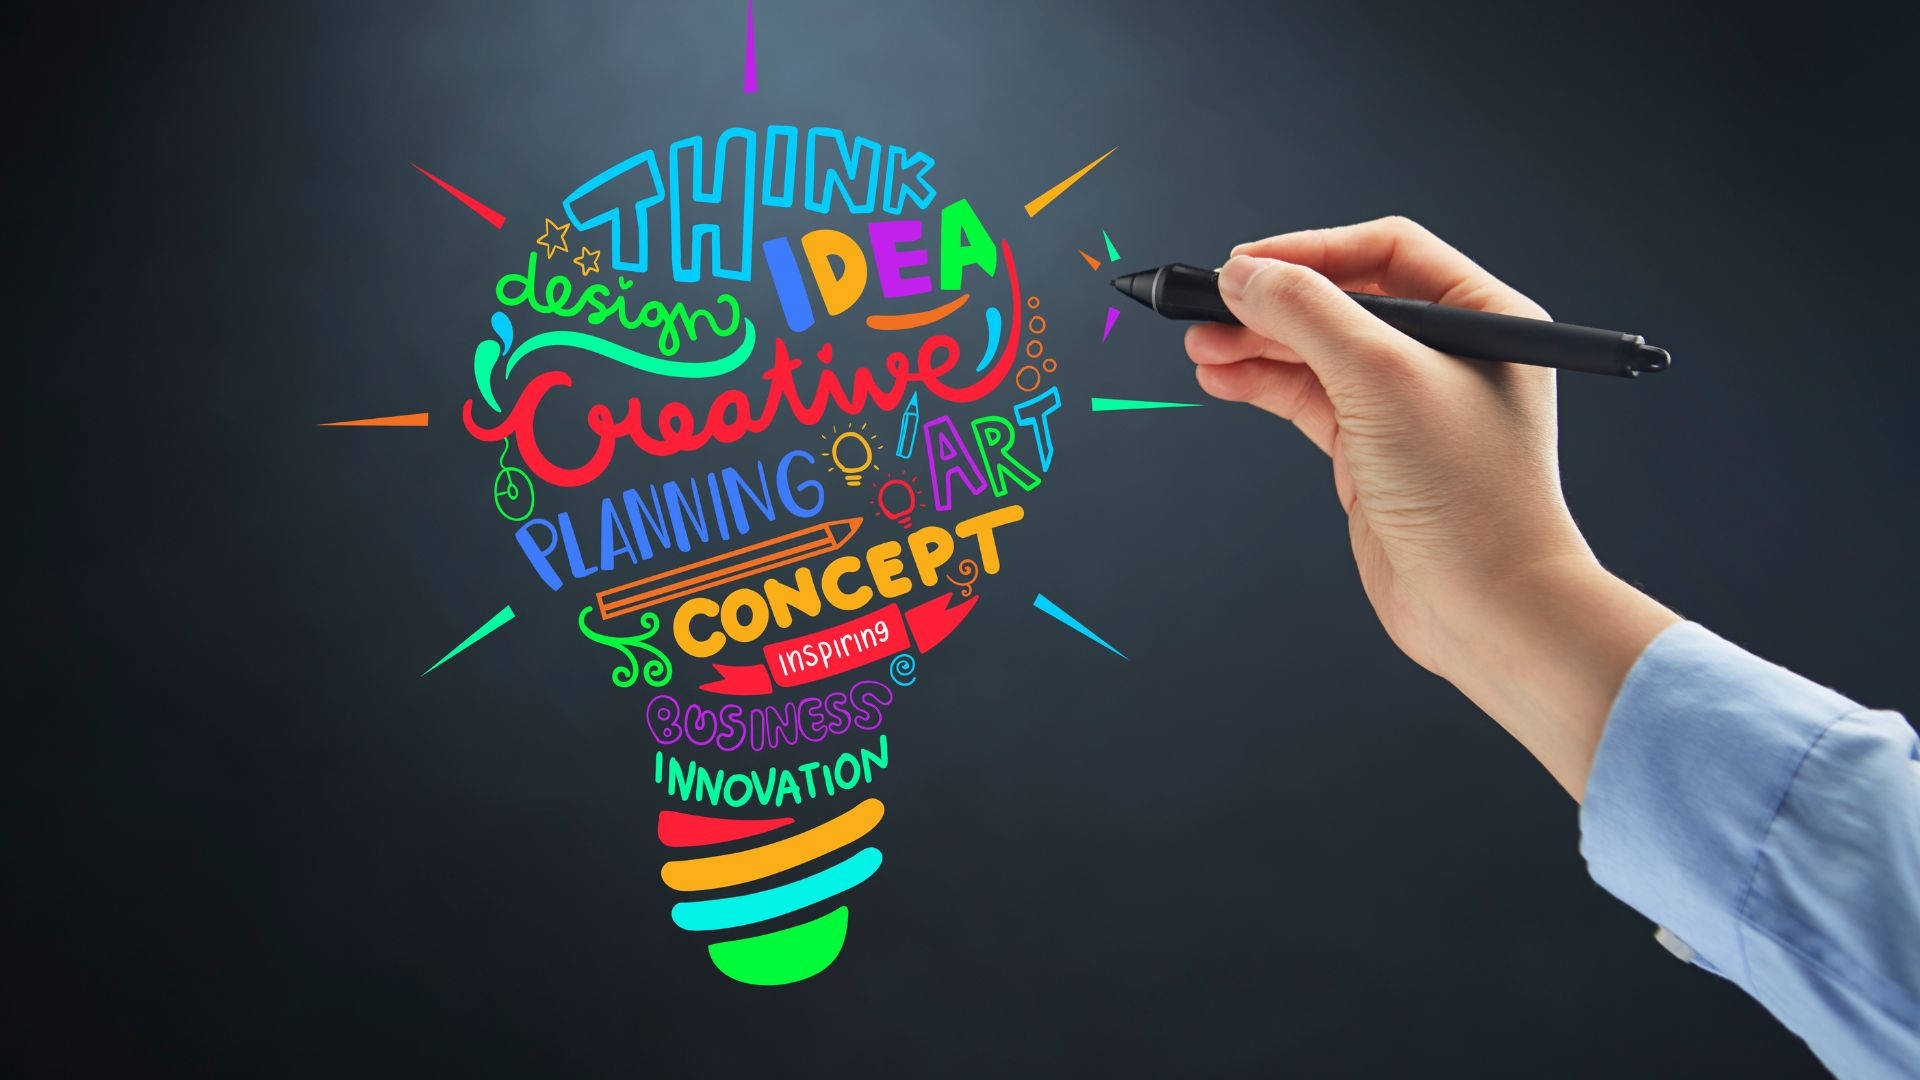 innovation and creativity wallpaper